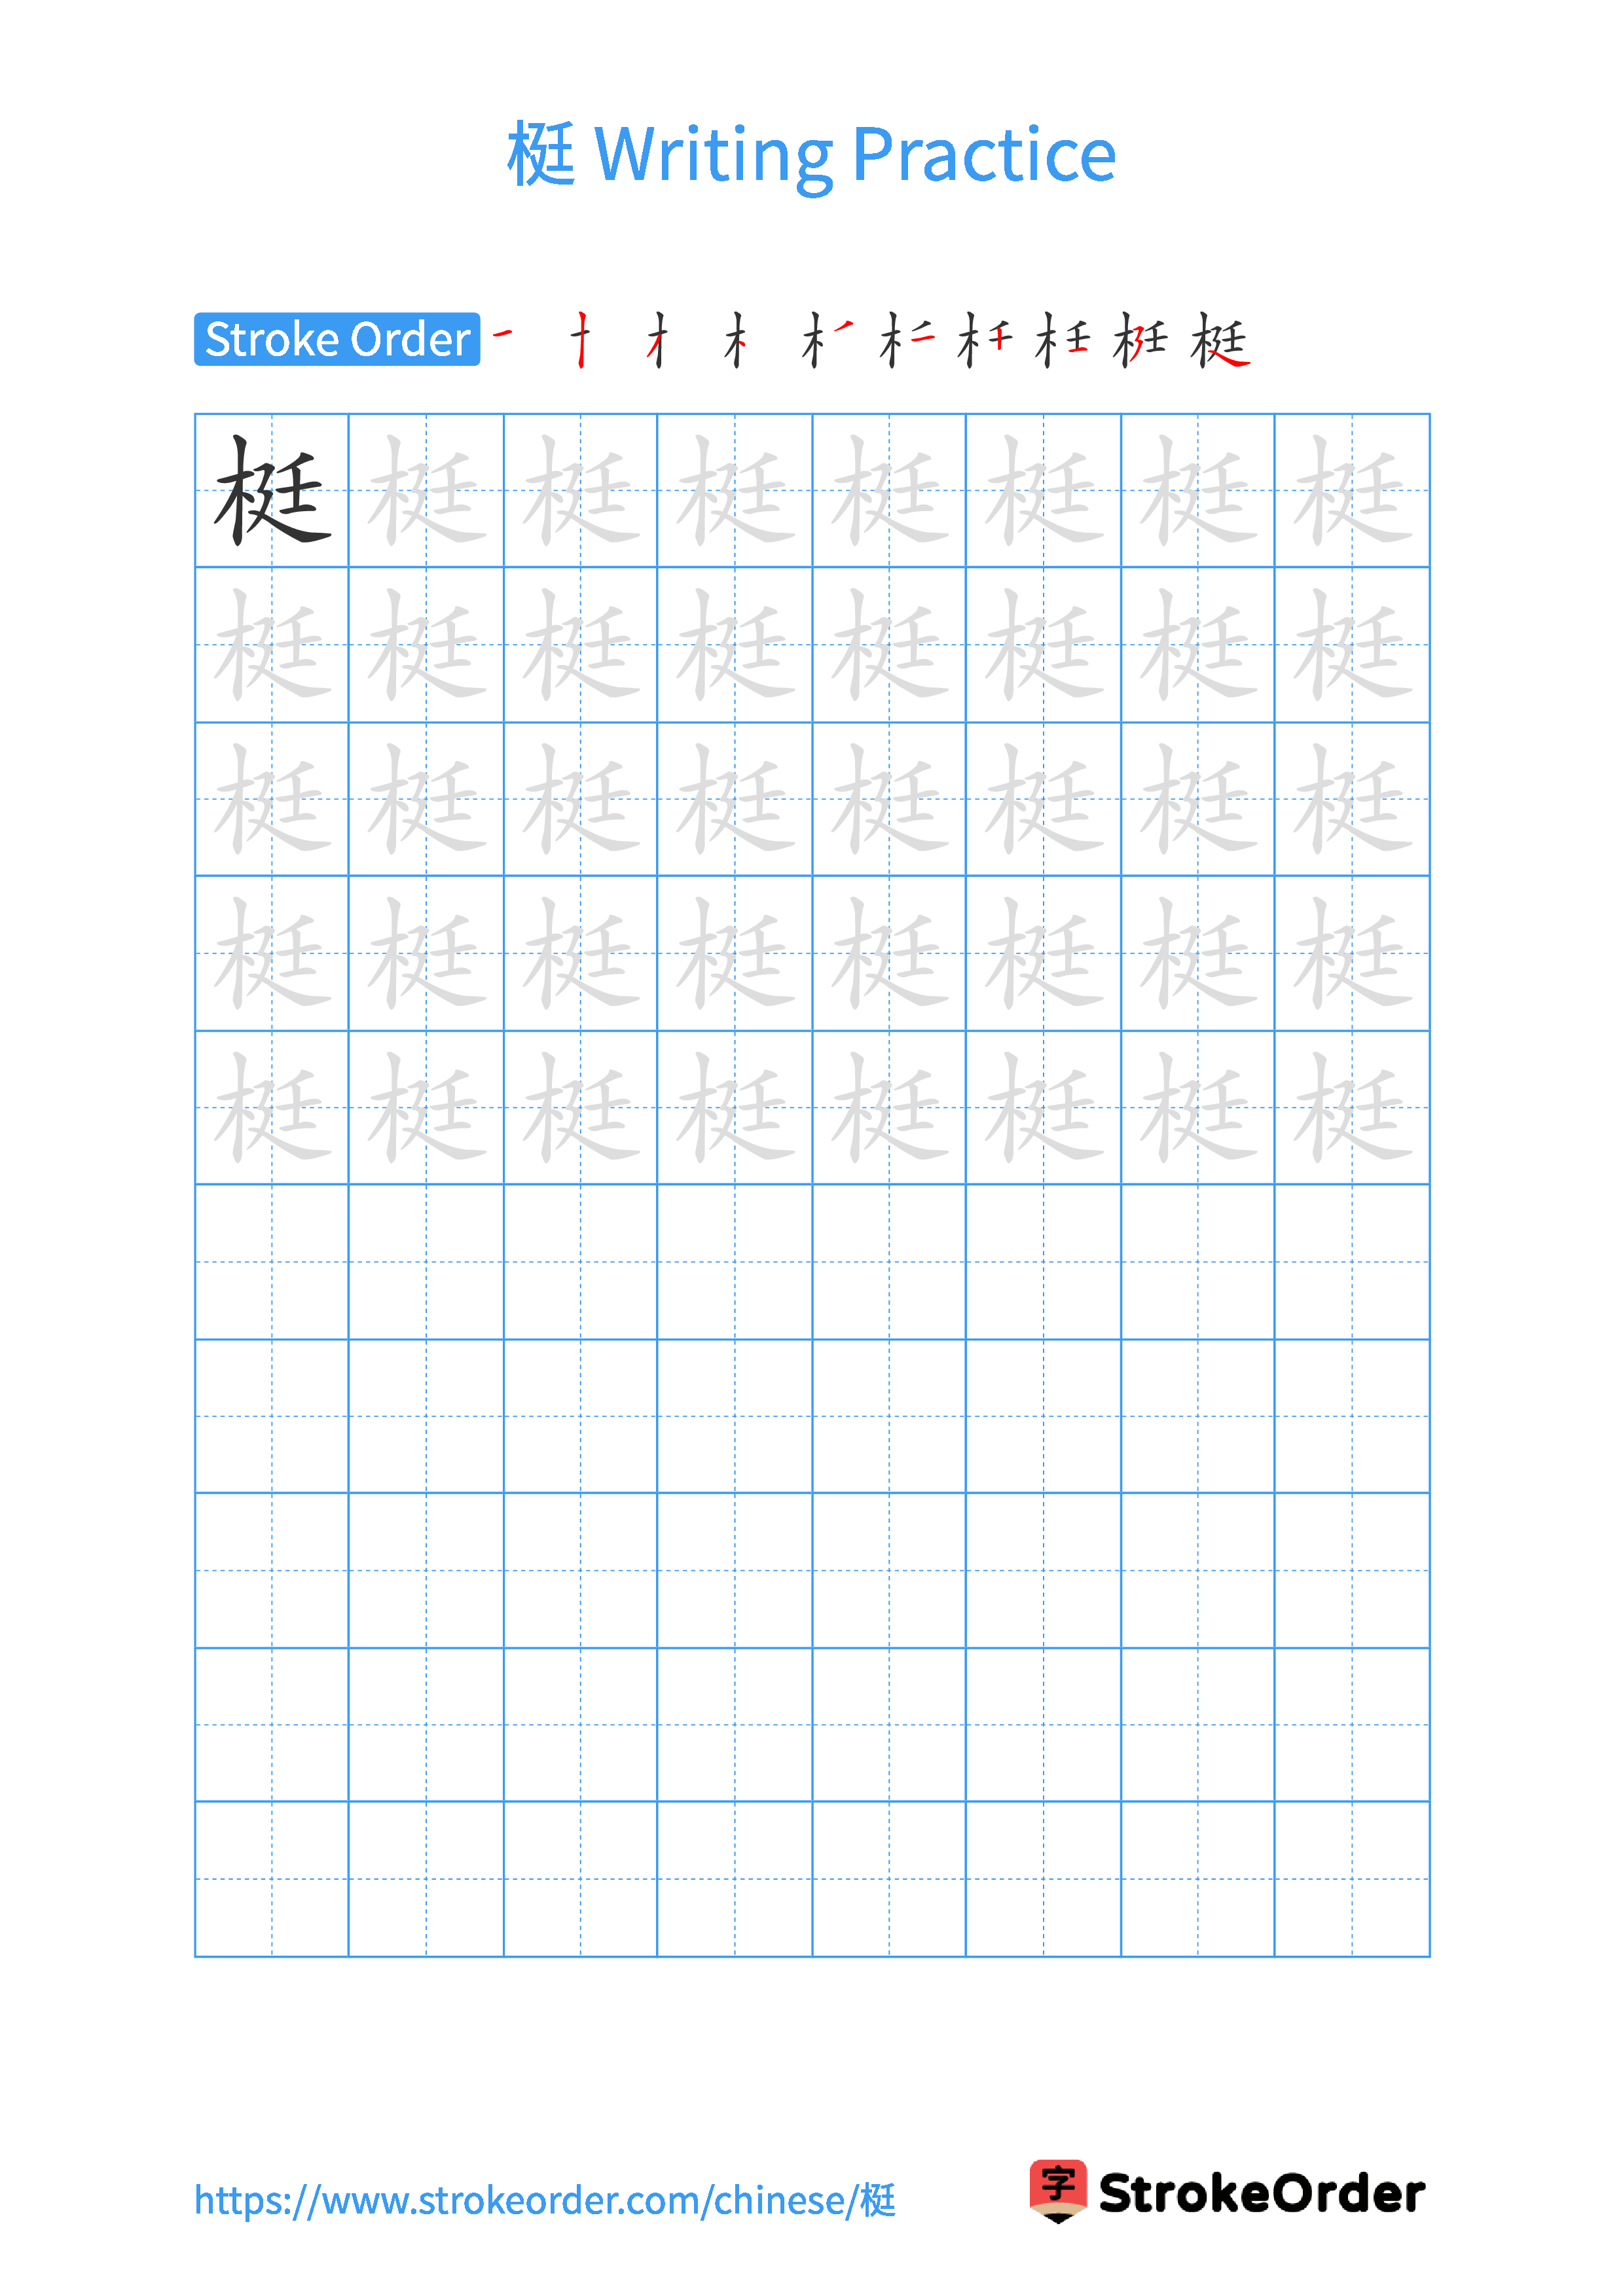 Printable Handwriting Practice Worksheet of the Chinese character 梃 in Portrait Orientation (Tian Zi Ge)